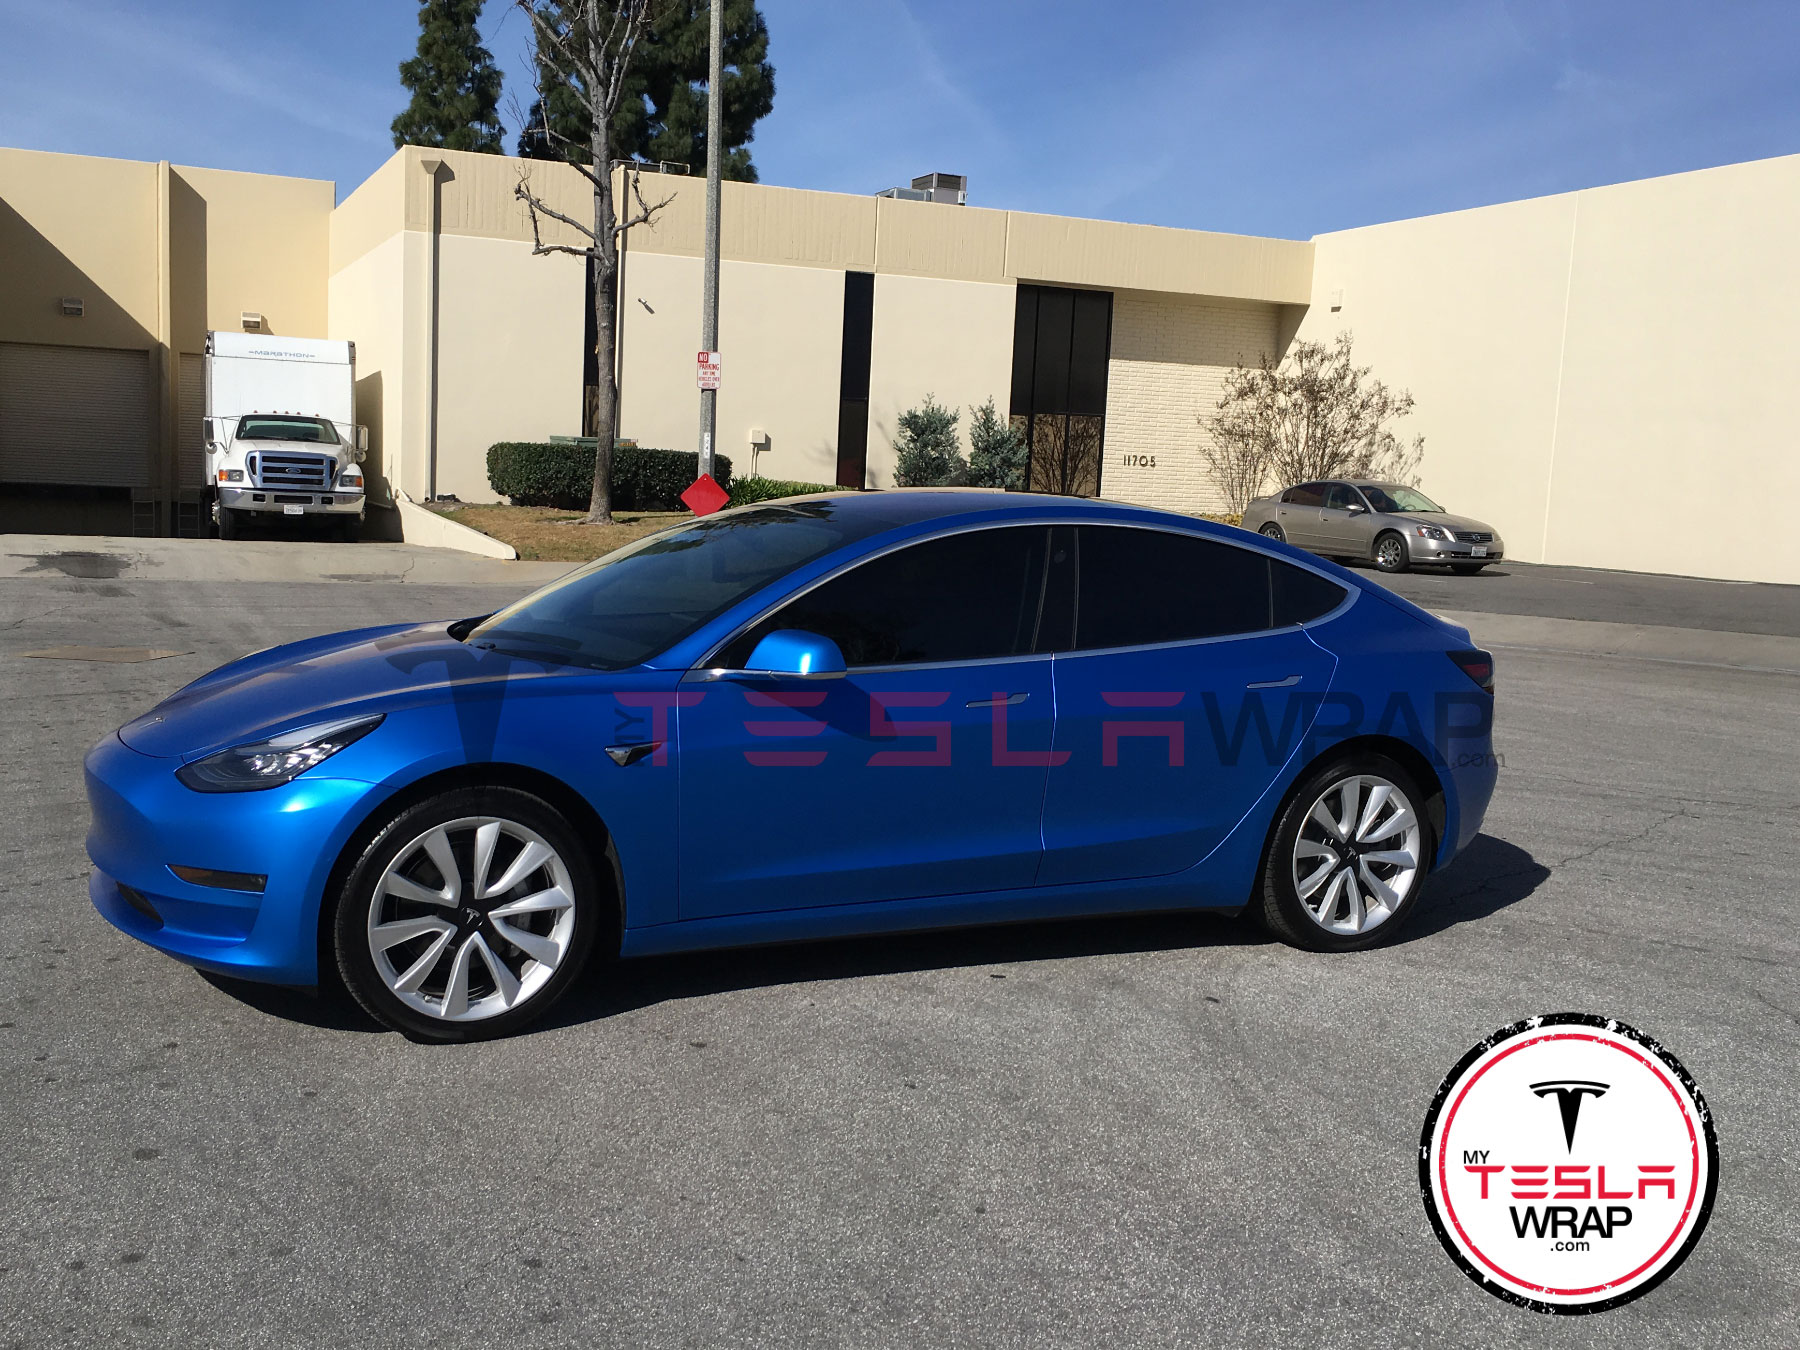 Tesla Model 3 Wrapped in Blue Satin Vinyl car Wrap